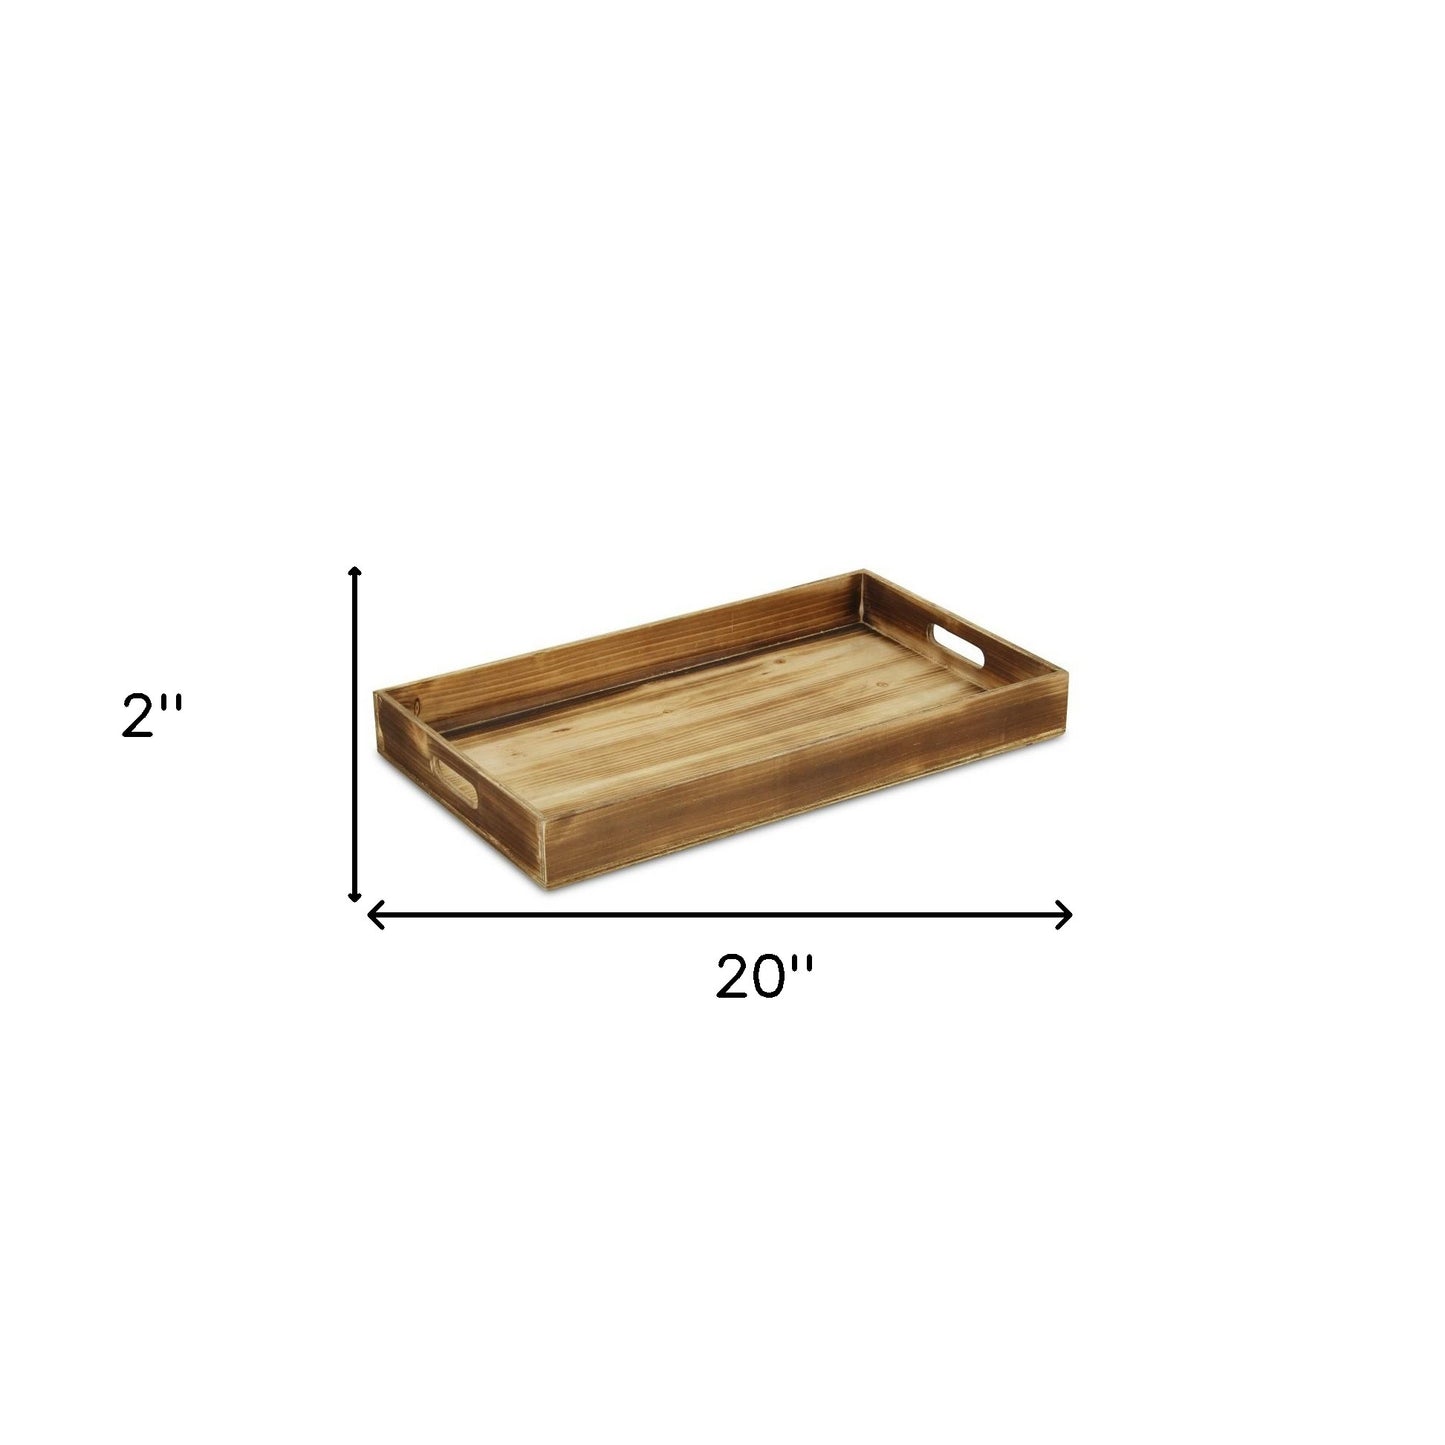 Minimalist Brown Wooden Tray